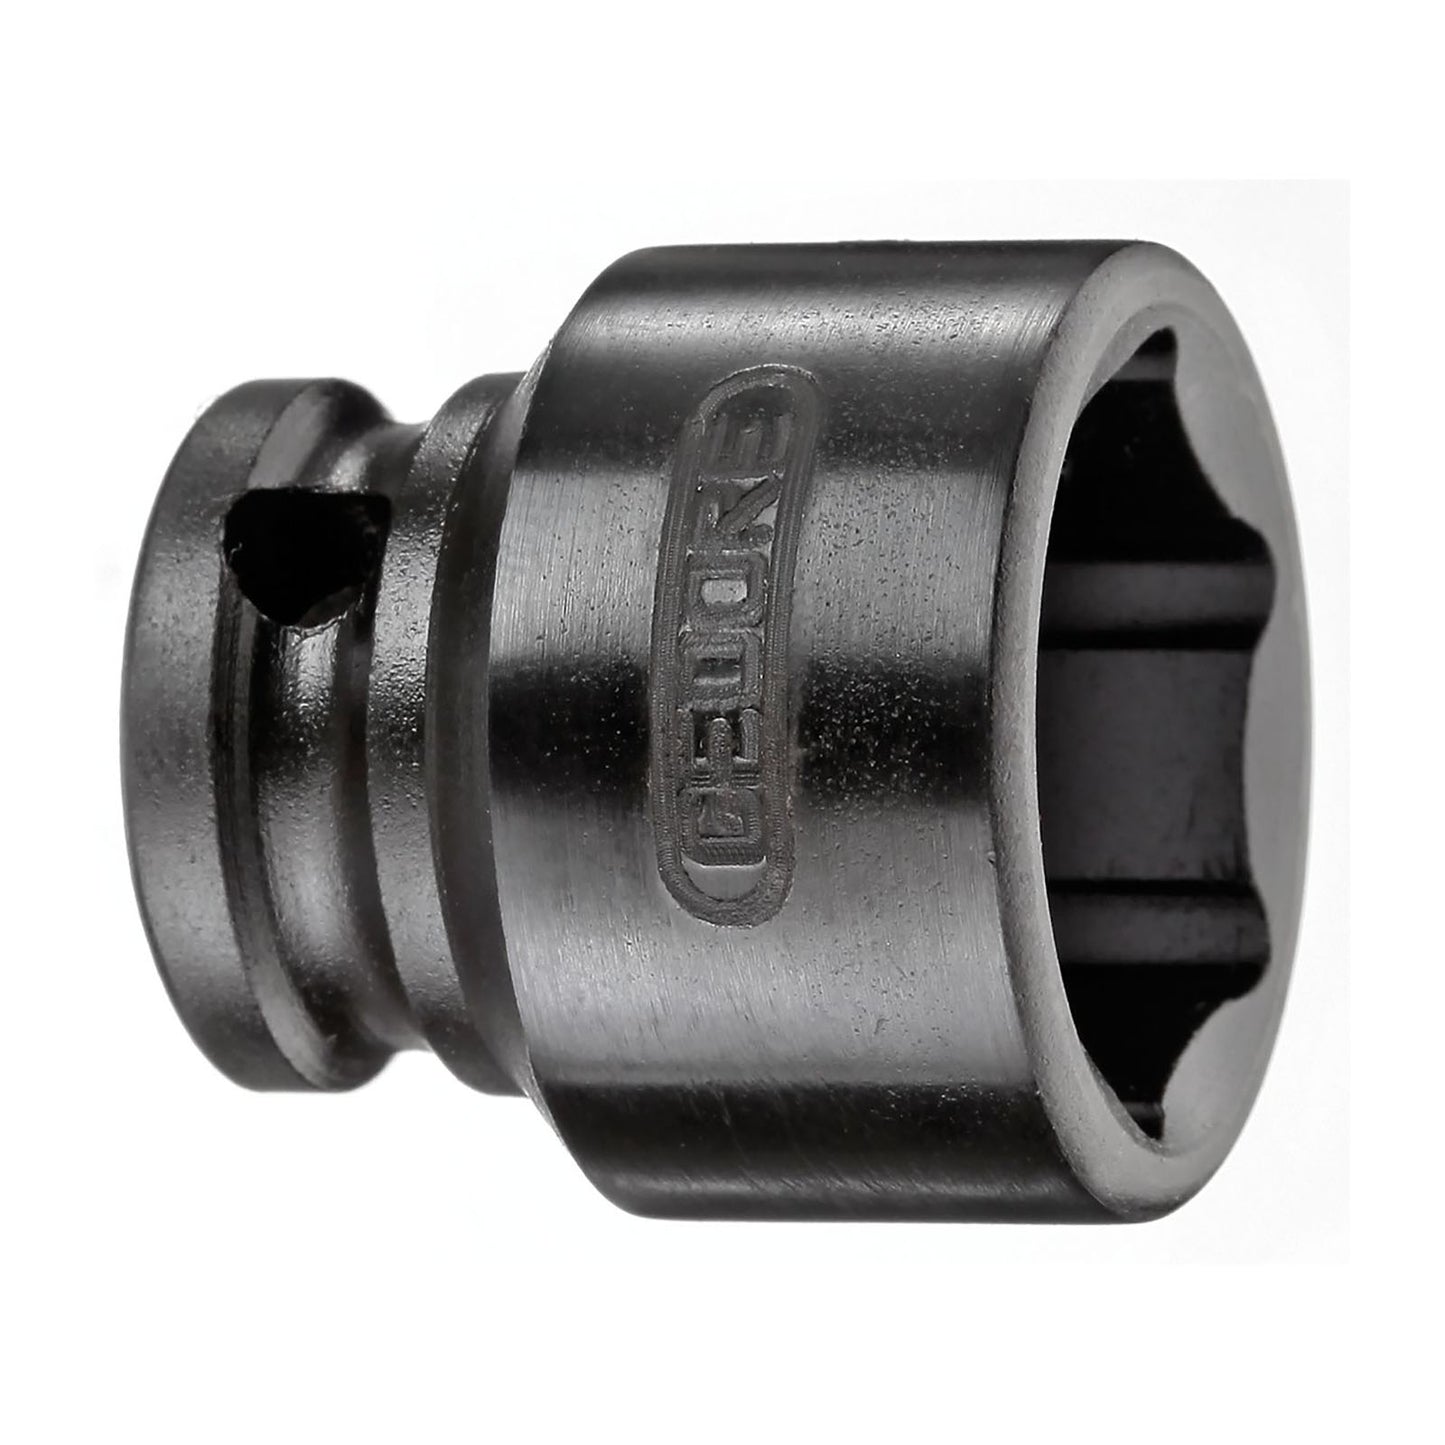 GEDORE K 30 14 - Hex Impact Socket 3/8", 14 mm (6251910)